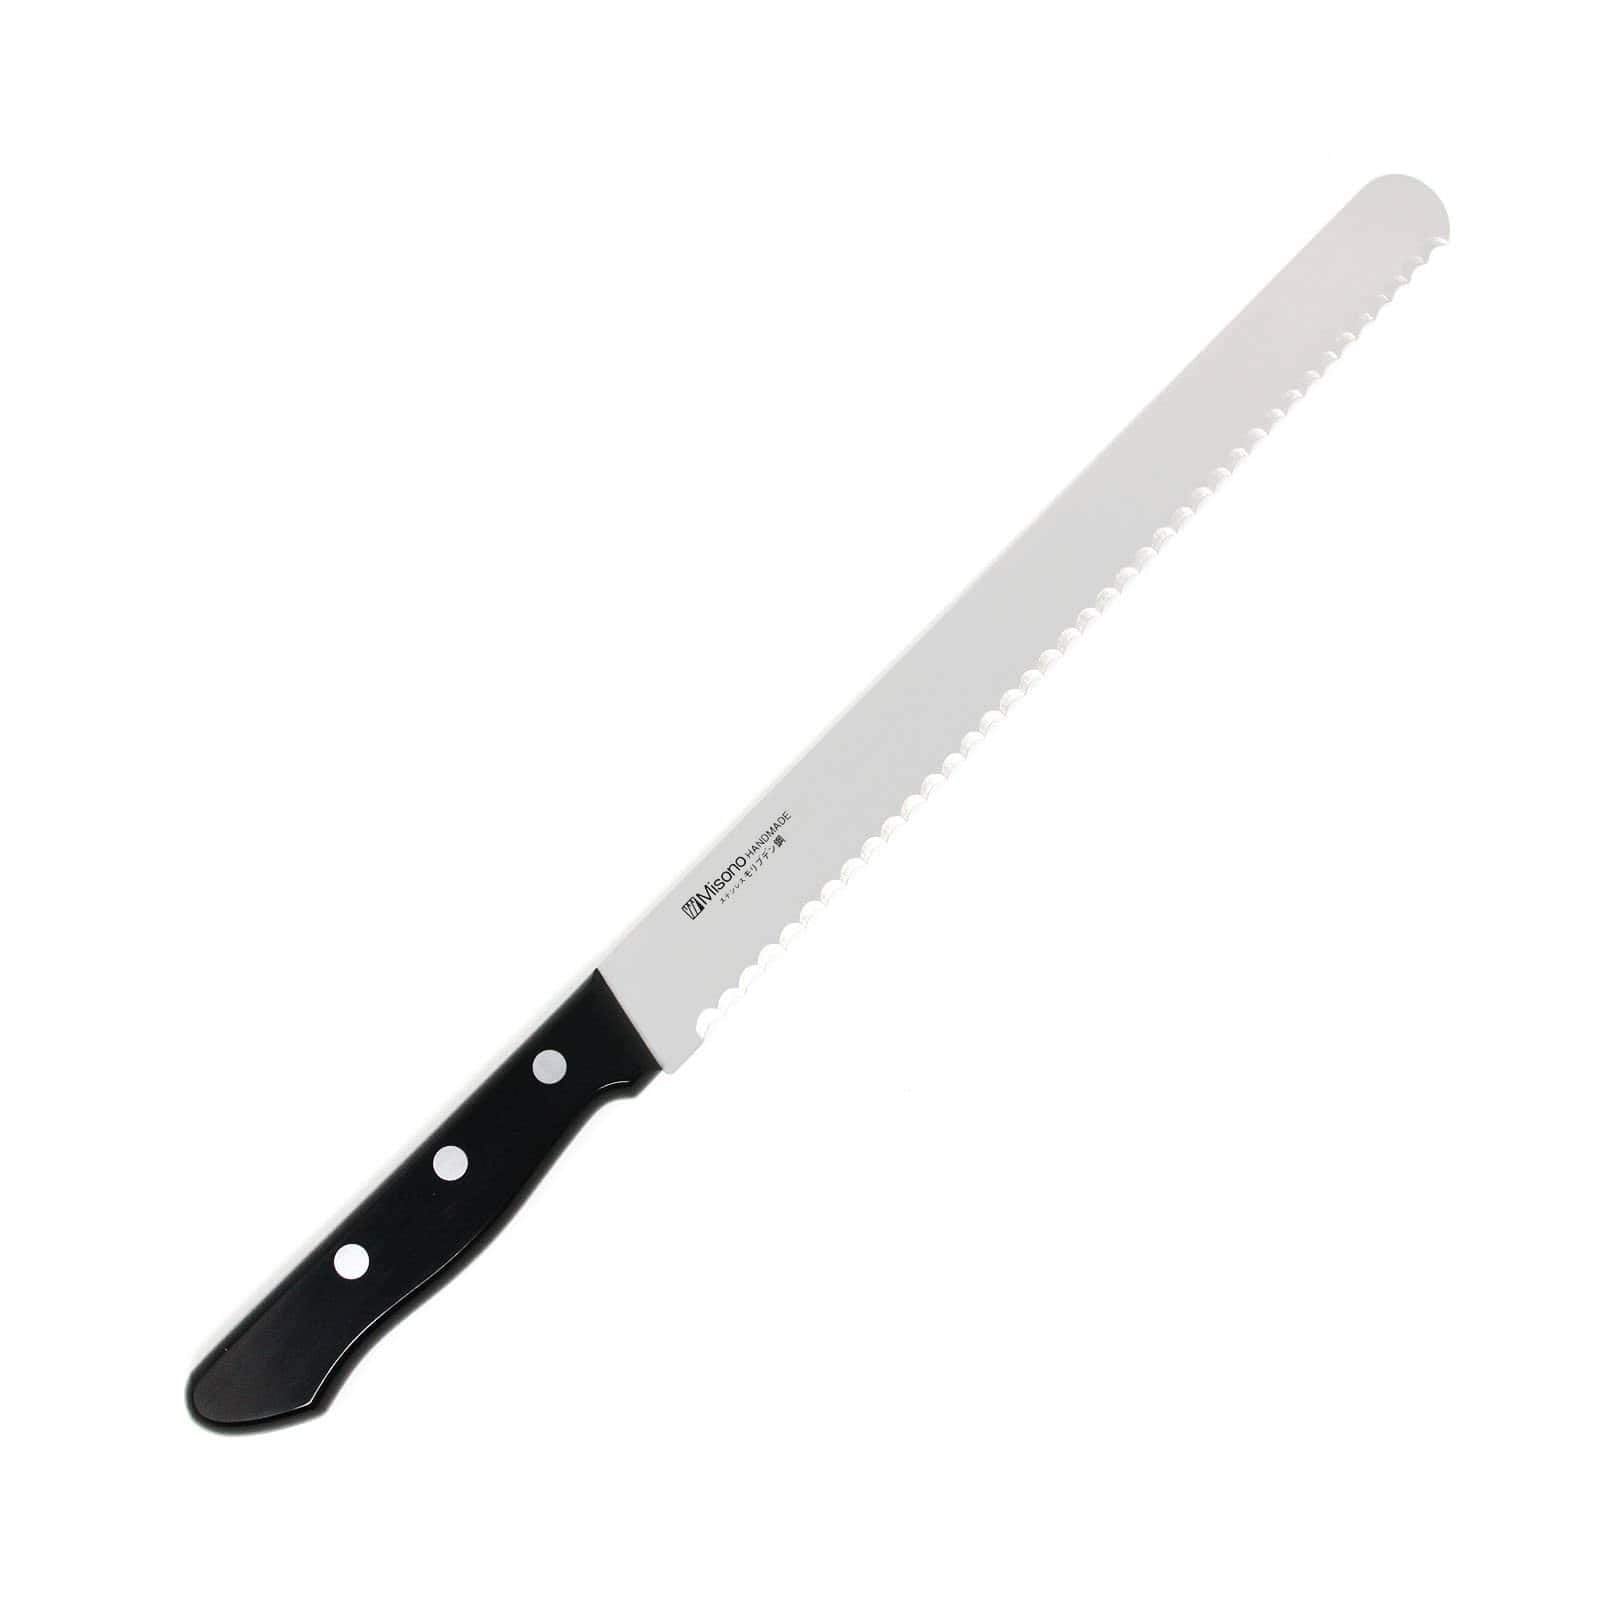 Misono Molybdenum Bread Knife Bread Knives